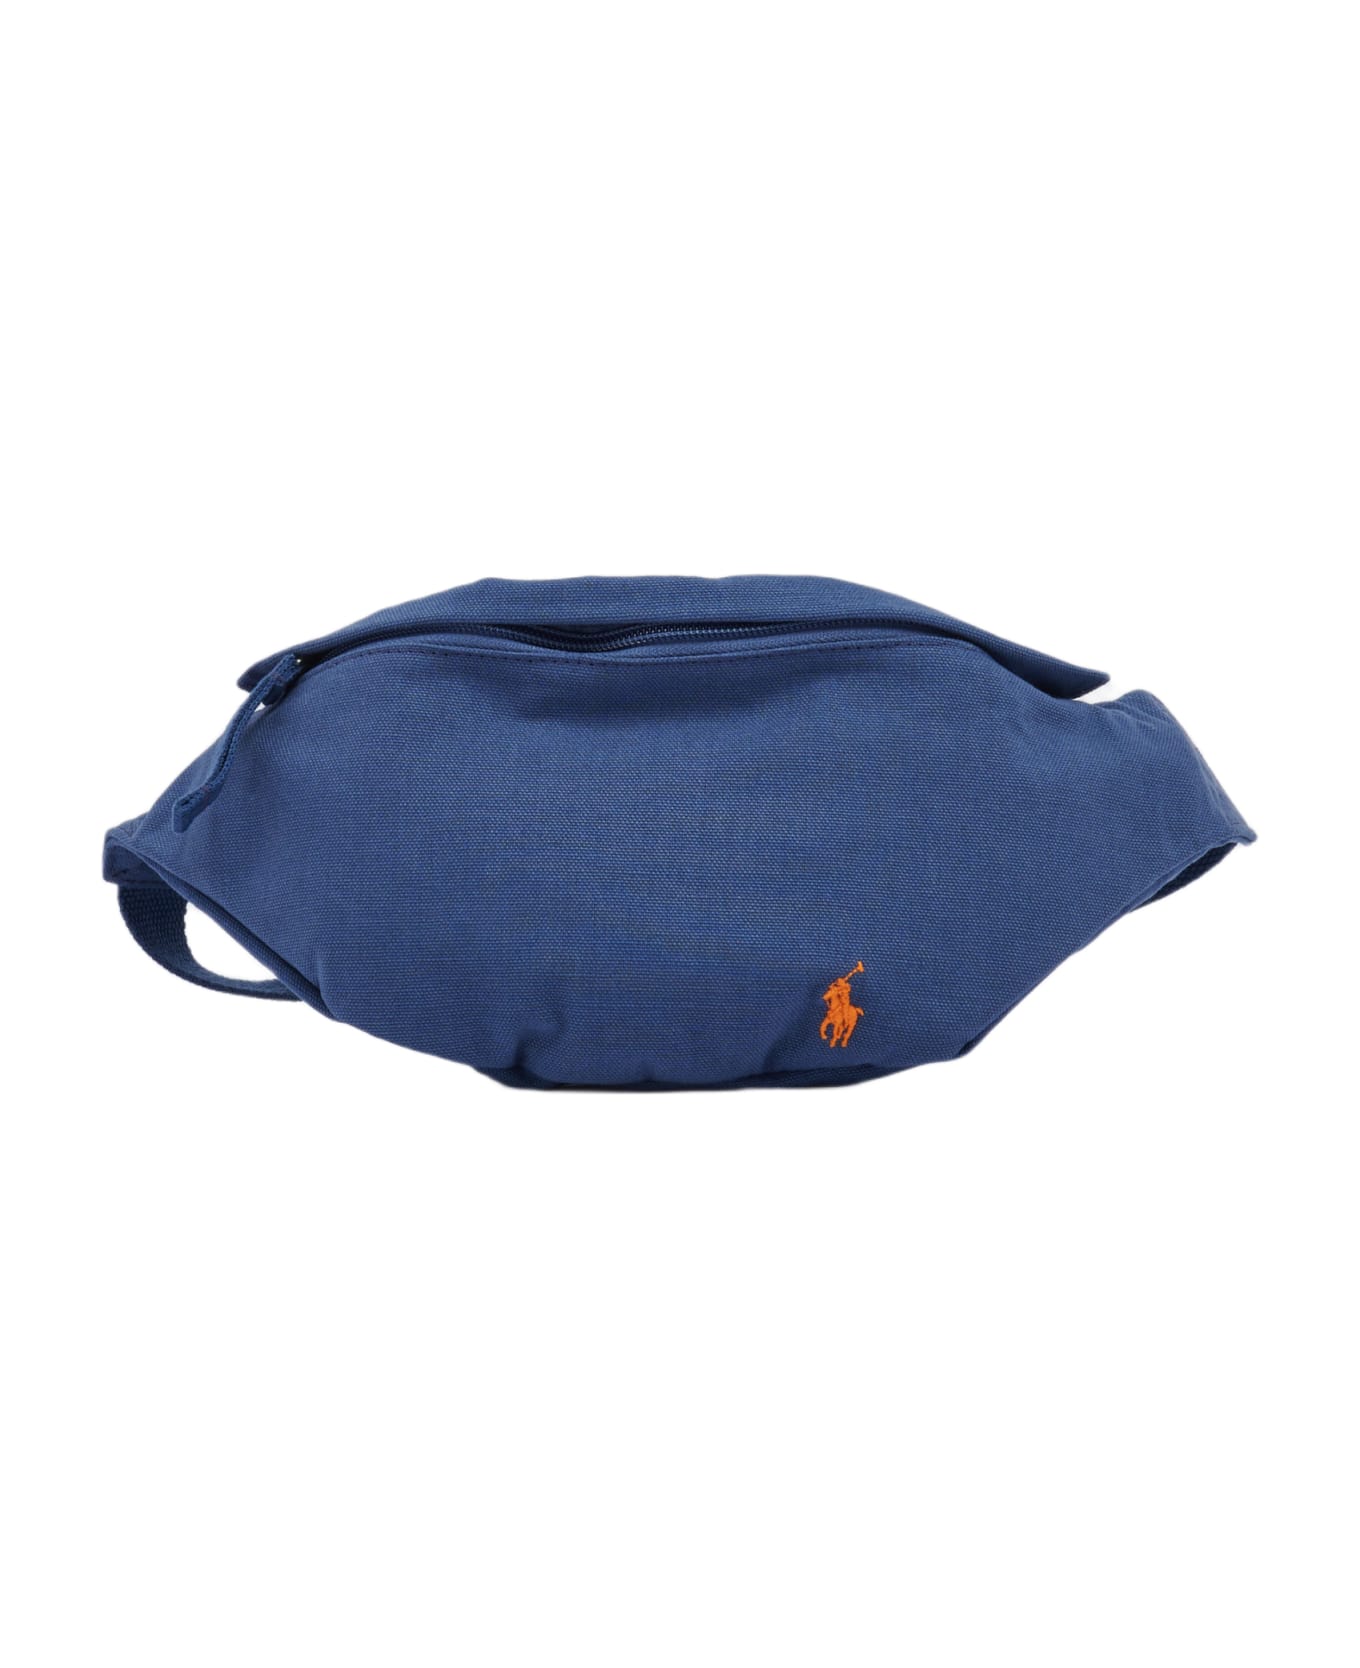 Polo Ralph Lauren Waist Bag-medium Shoulder Bag - INDACO